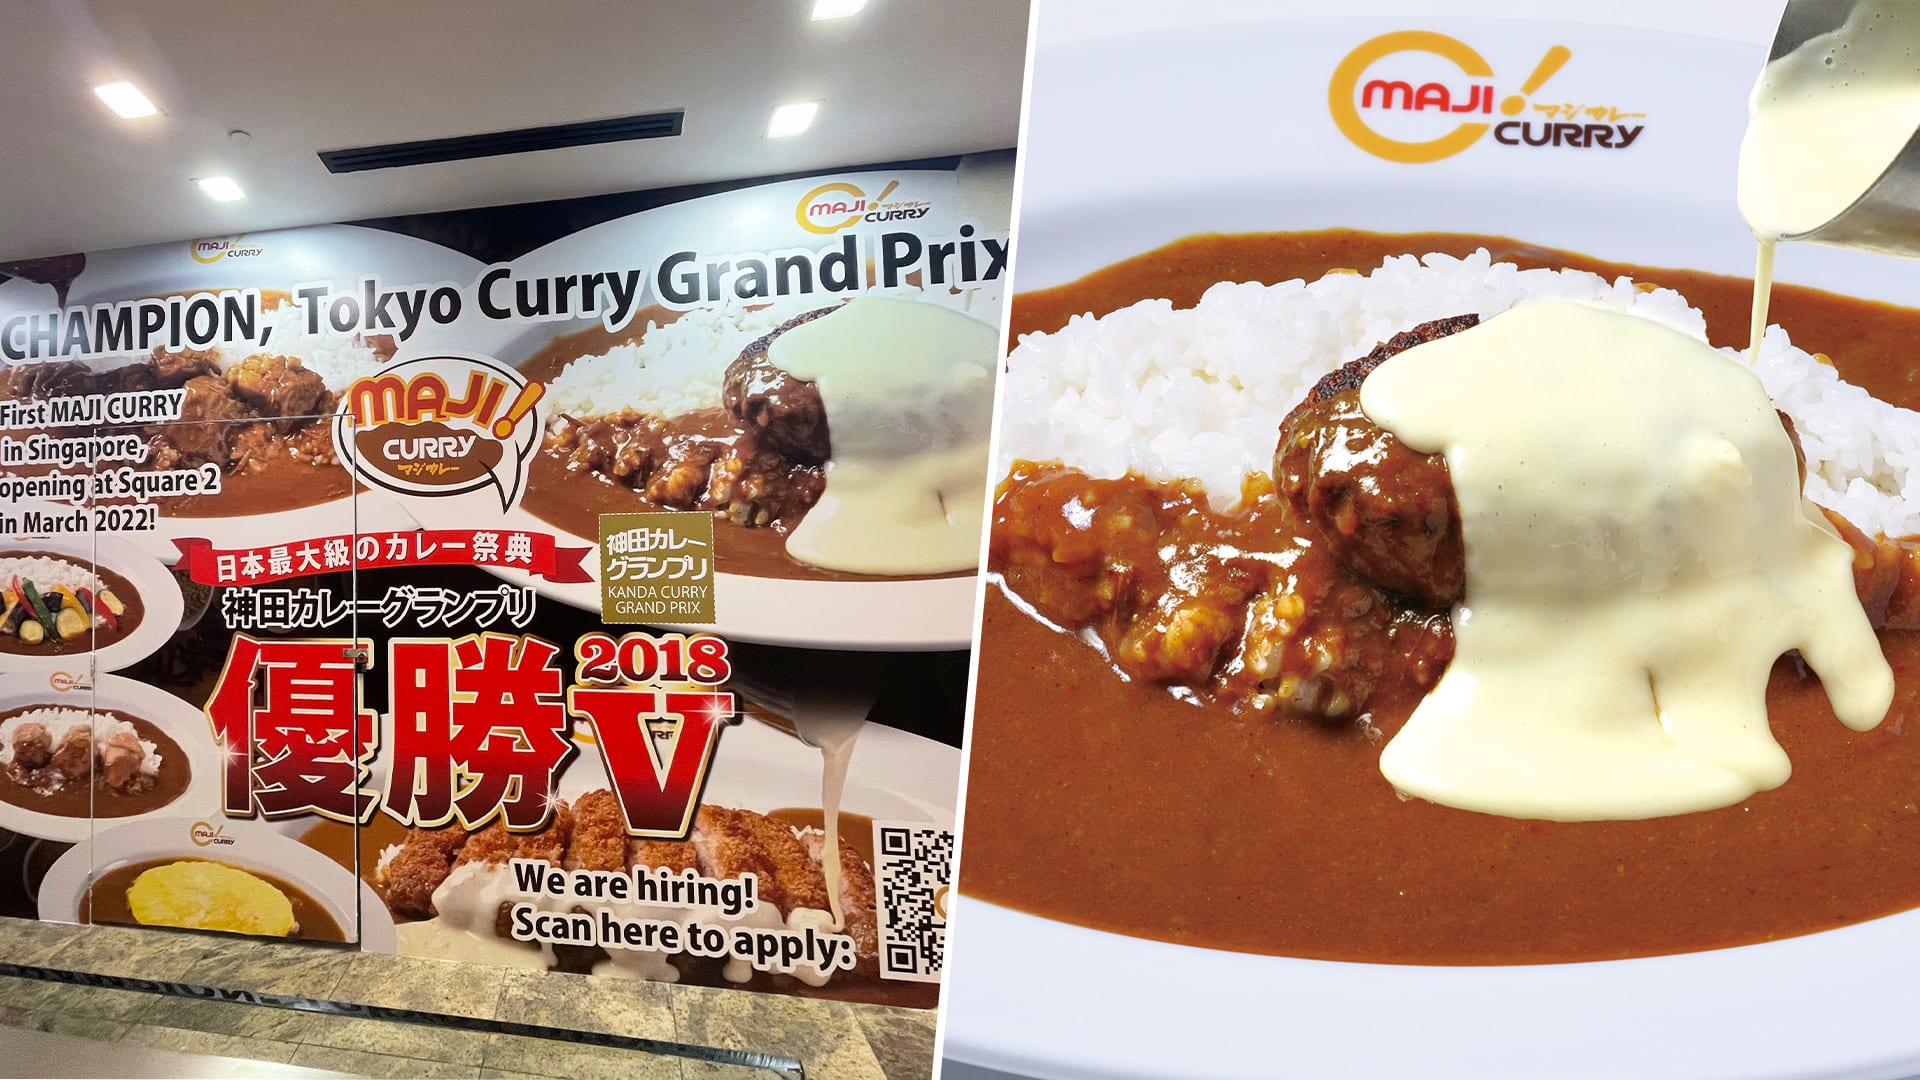 Award-Winning Tokyo Curry Restaurant Opening In Novena, Cheese Fondue Hamburg Curry Rice Offered